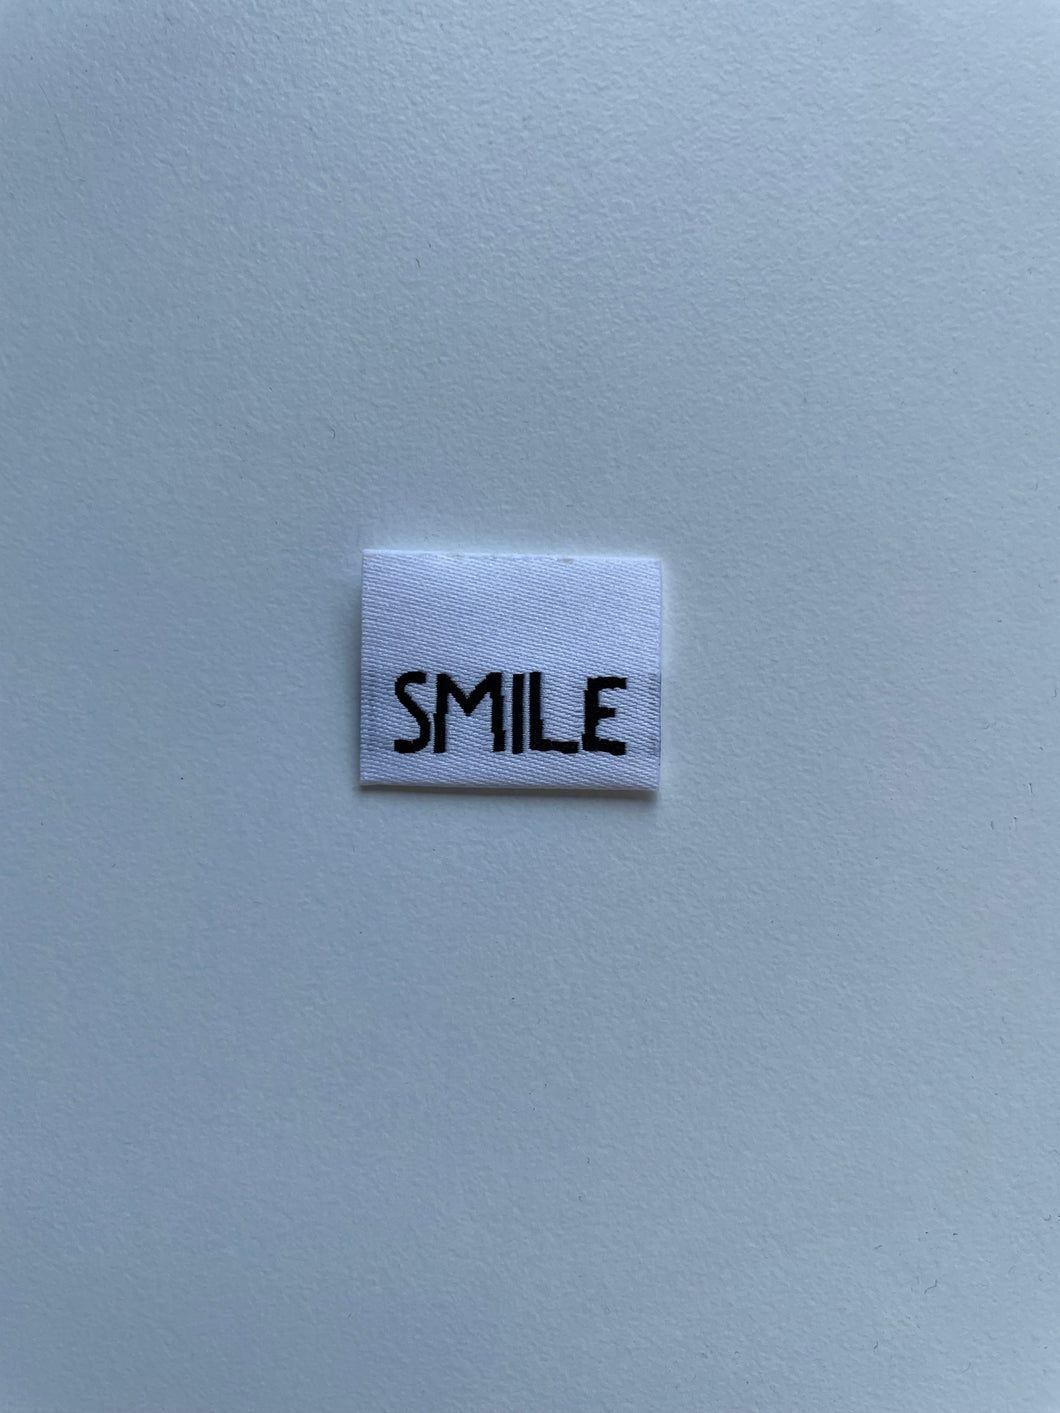 Smile Label